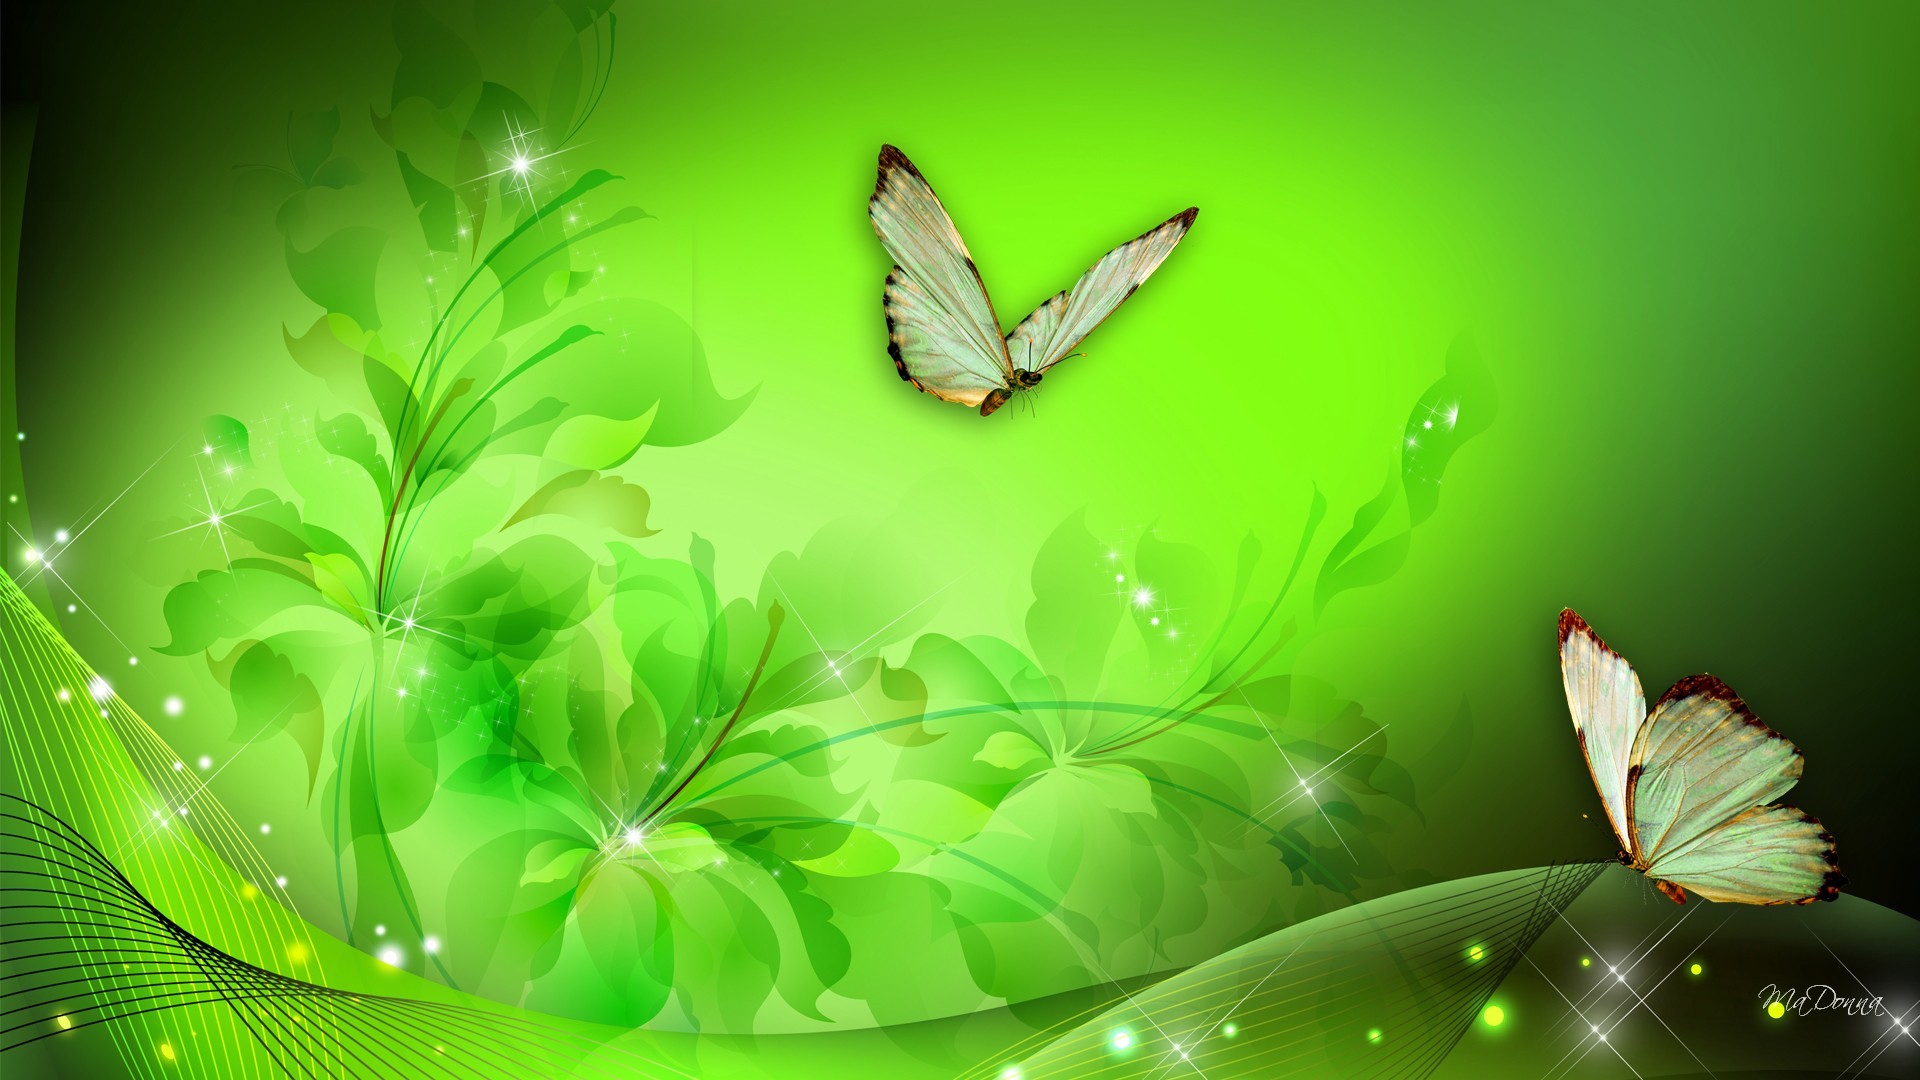 1920x1080 Green Floral Fantasy - Collages Wallpaper ID 1379735 - Desktop Nexus  Abstract